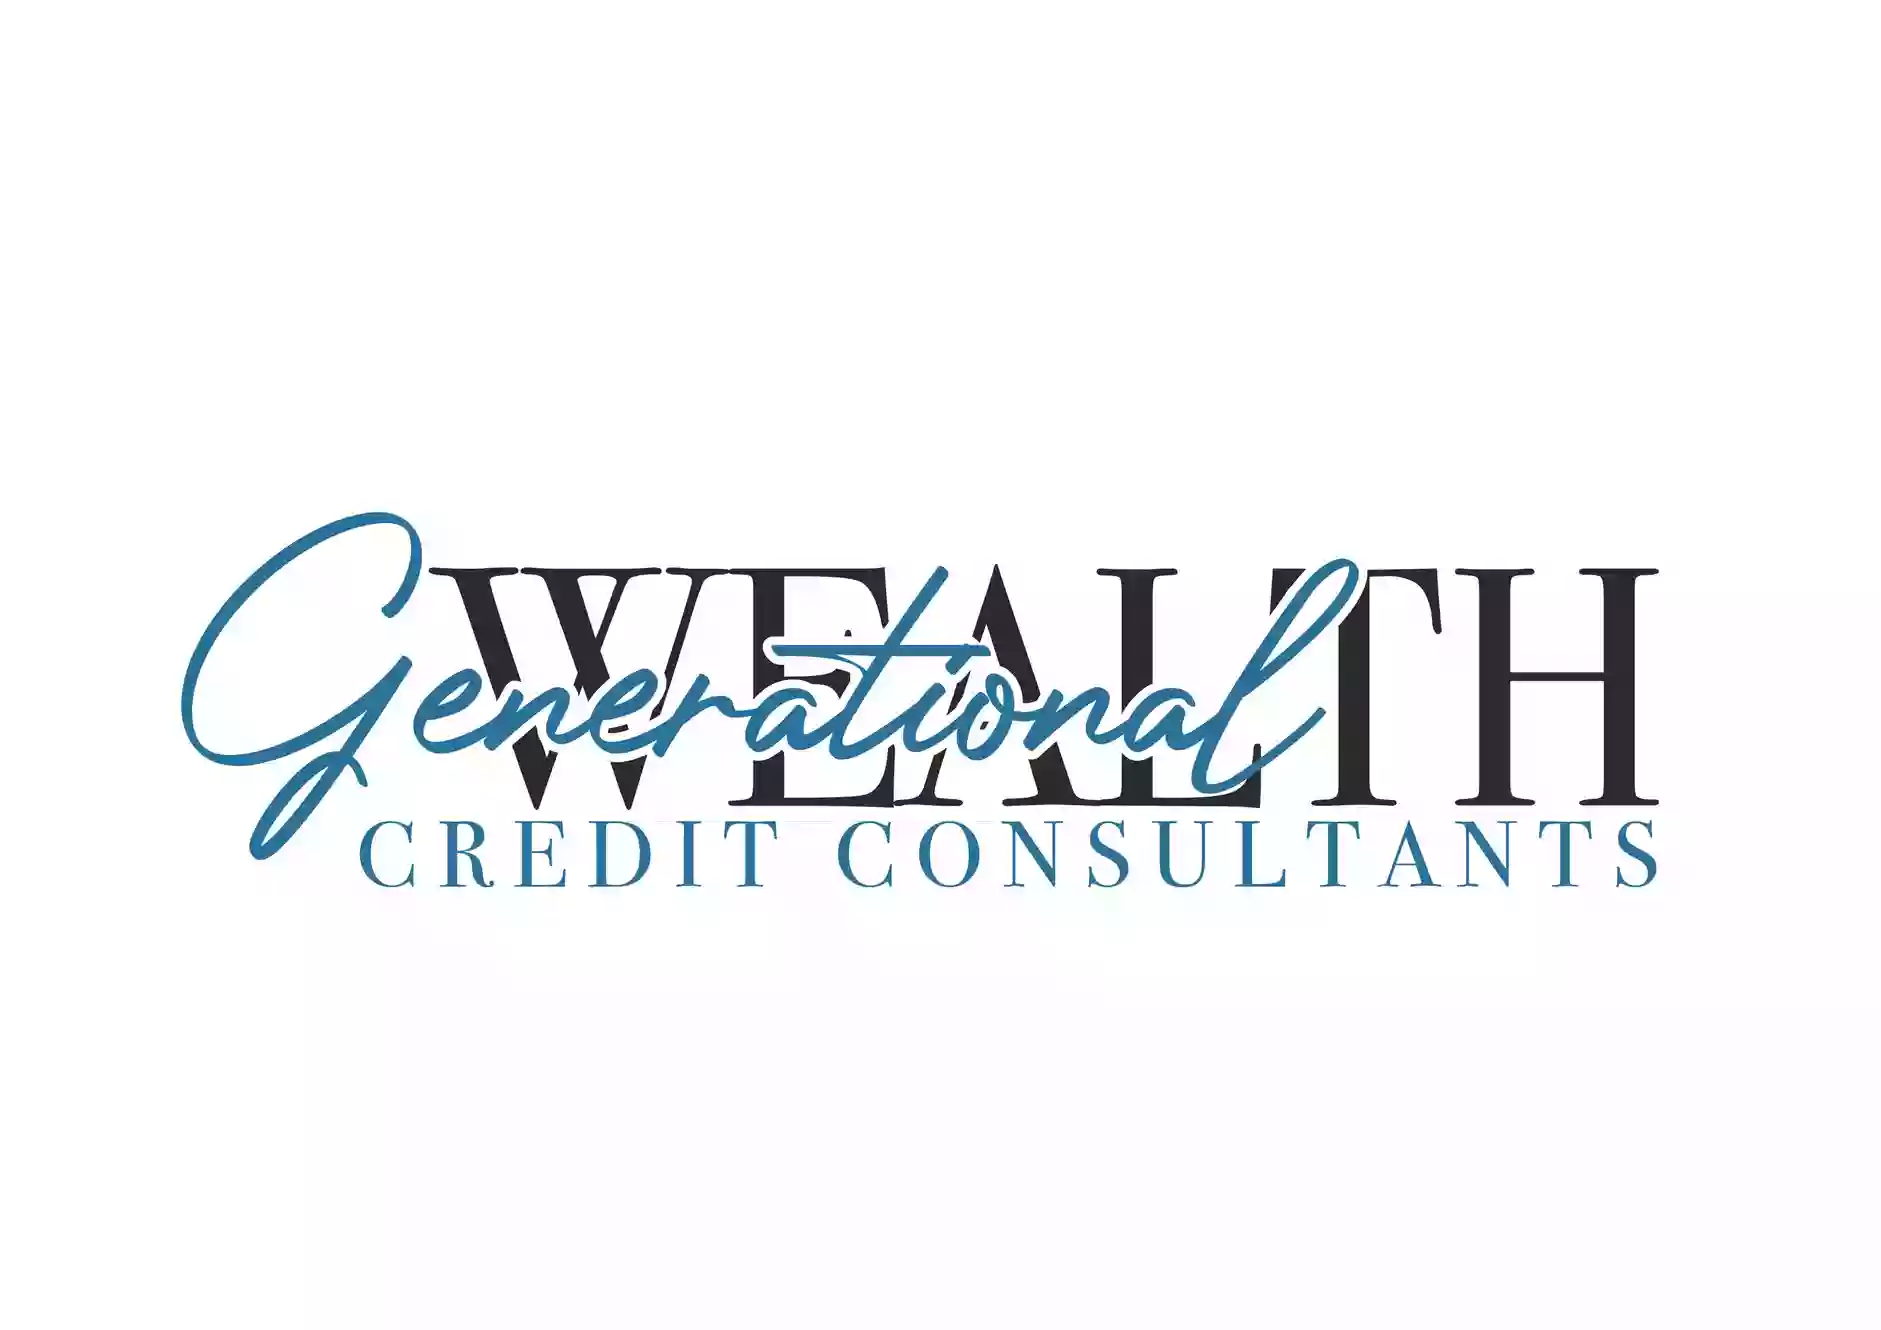 Generational Wealth Credit Consultants